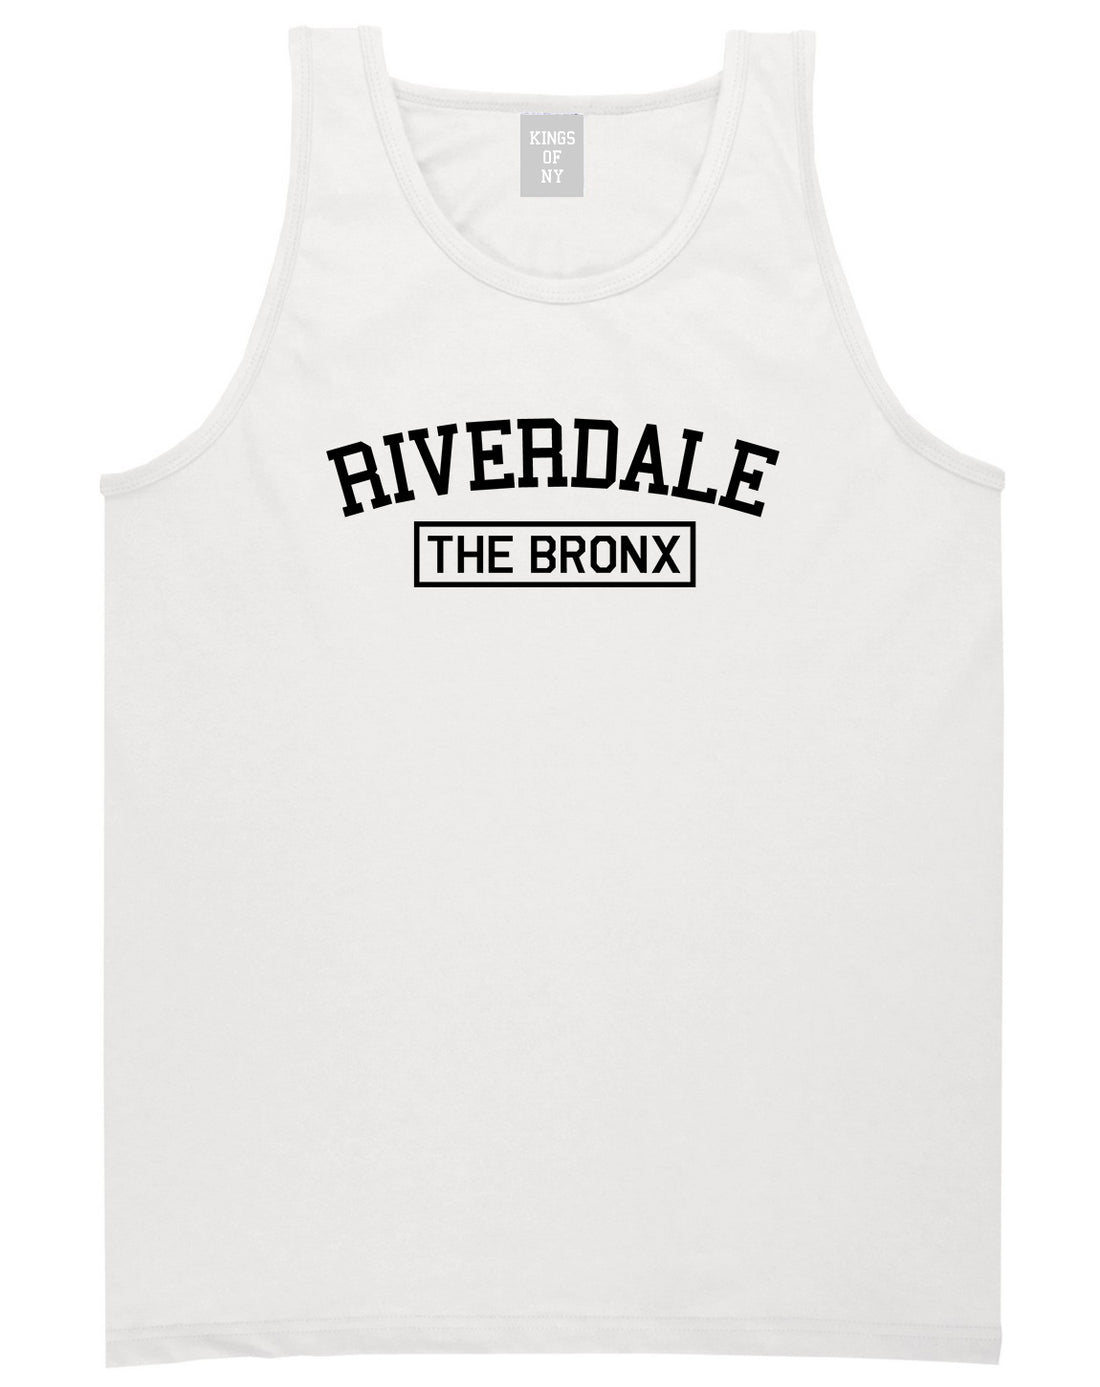 Riverdale The Bronx NY Mens Tank Top T-Shirt White